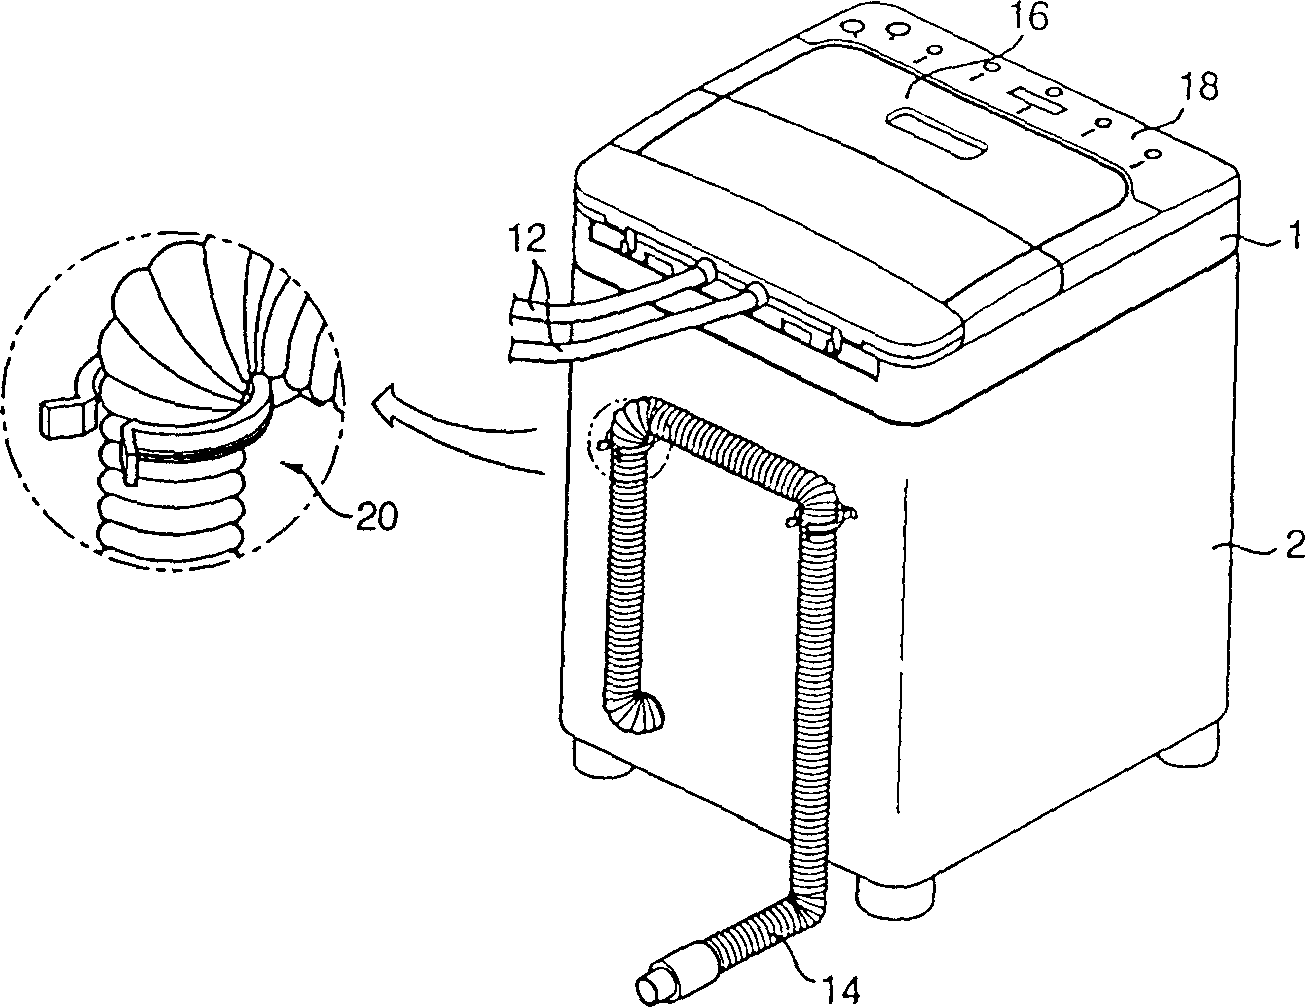 Structure for installing drainage soft tube of washing machine